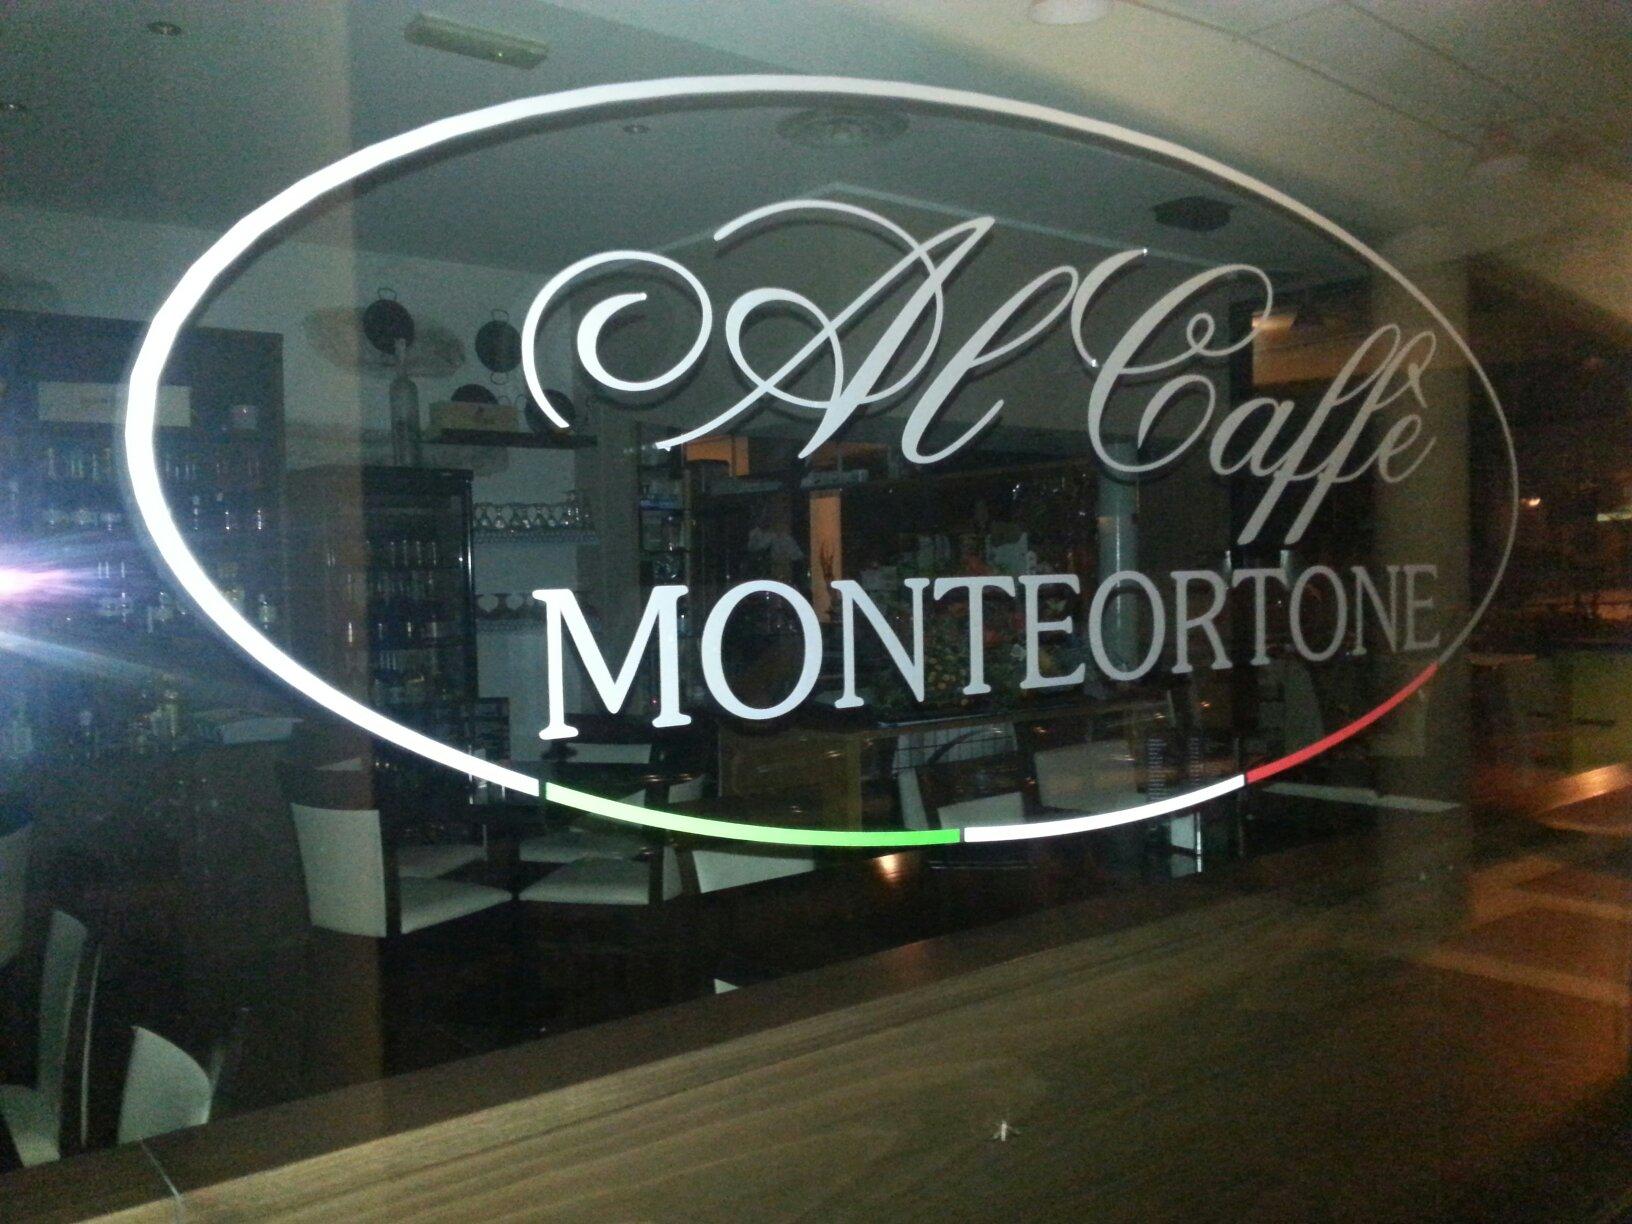 Caffè Monteortone